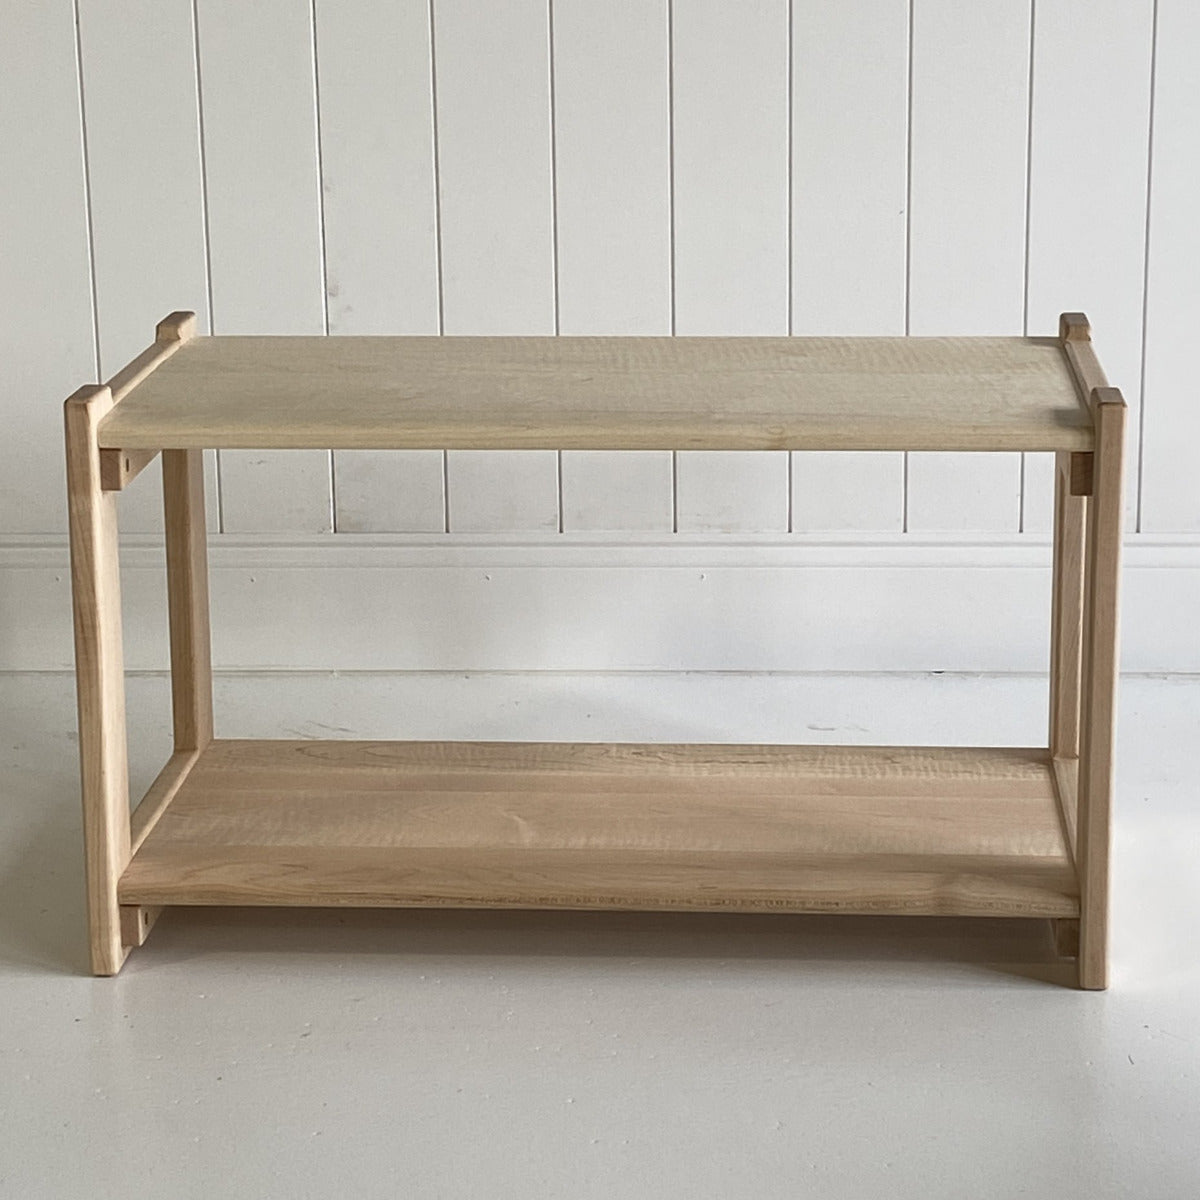 Maple Wood Open Shelving - 2 Shelves